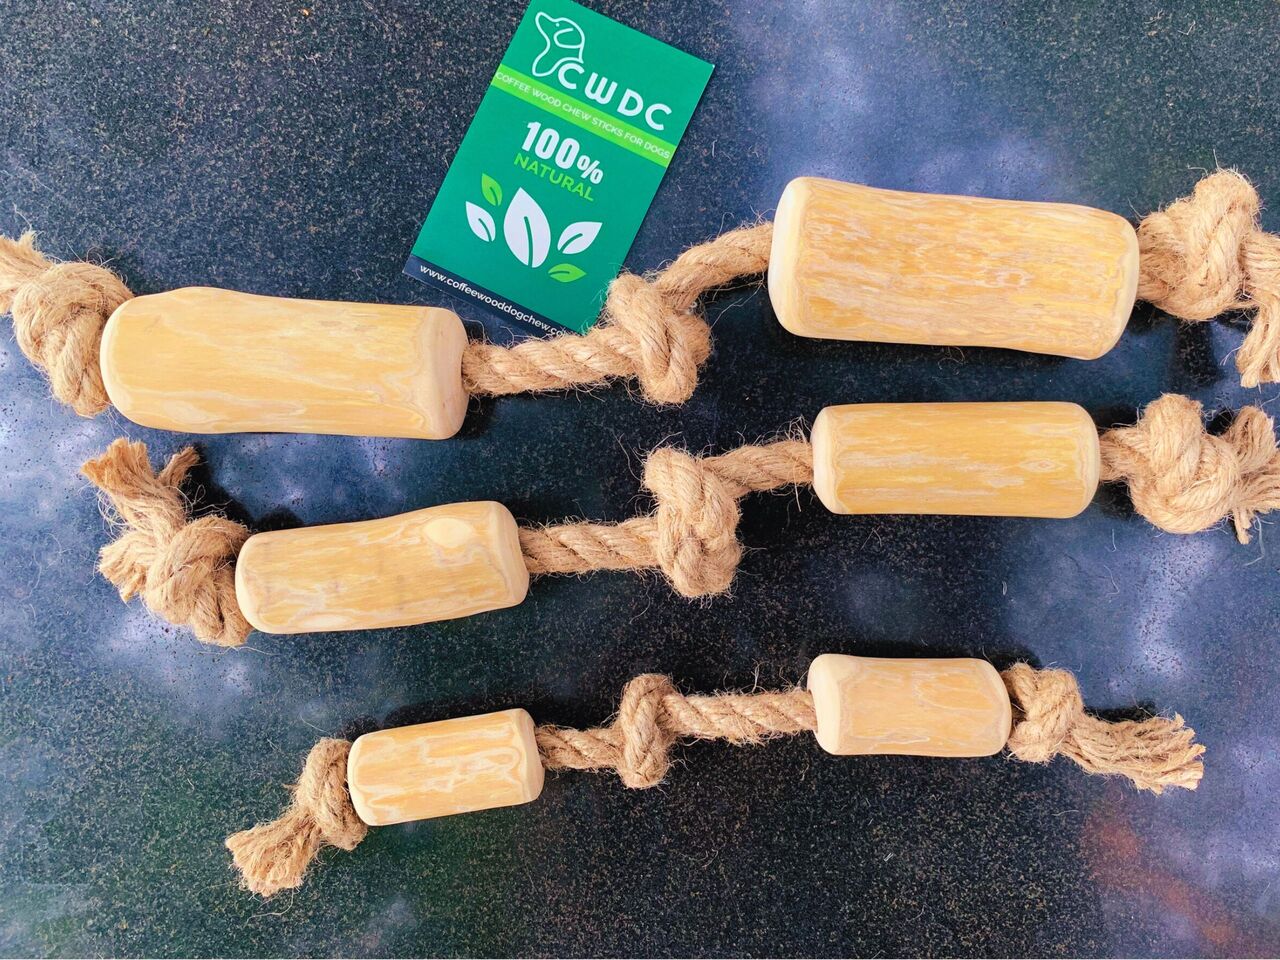 hemp-rope-and-coffee-wood-from-cwdc-vietnam-export-international-trade